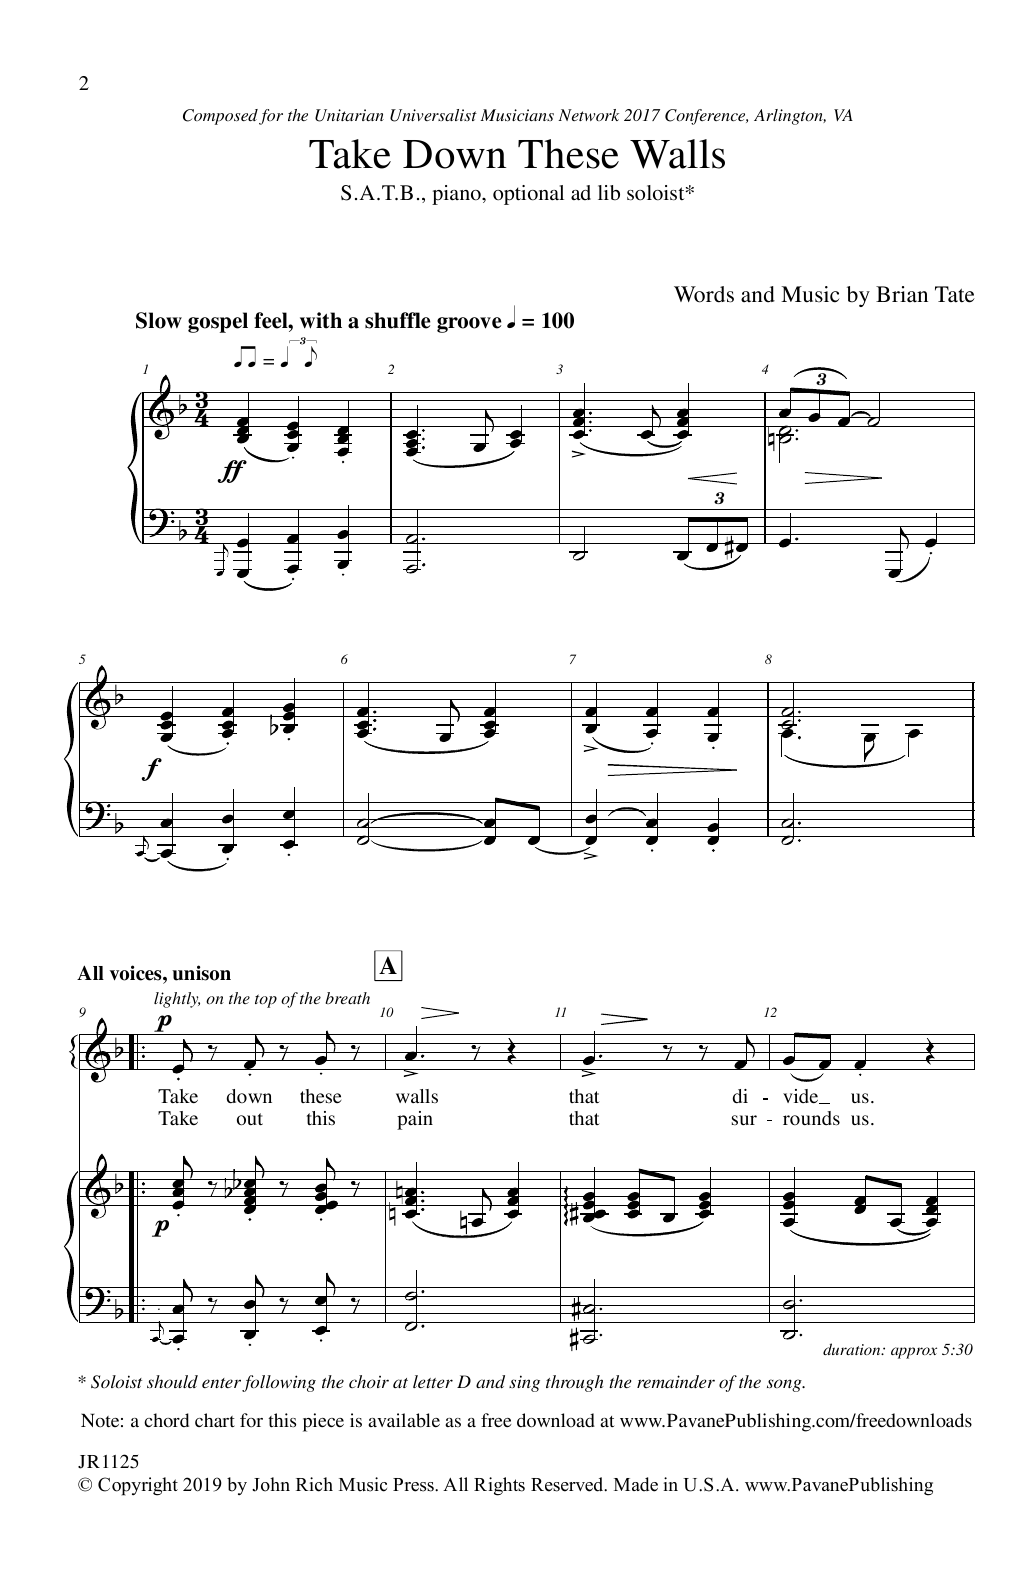 Brian Tate Take Down These Walls Sheet Music Notes & Chords for SATB Choir - Download or Print PDF